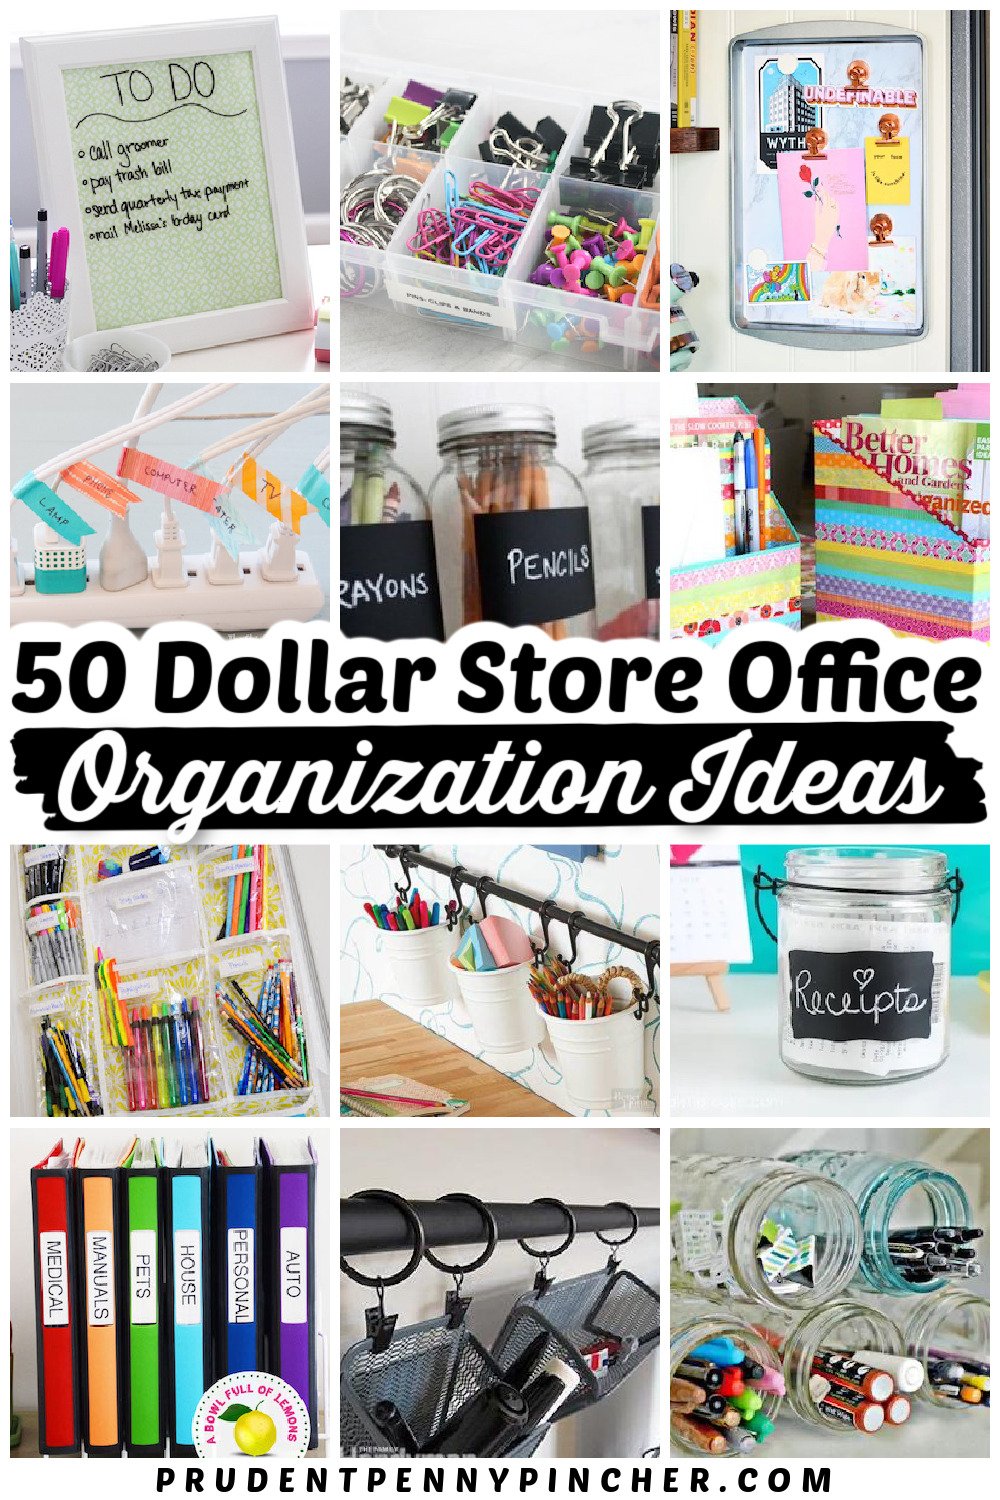 50 Dollar Store Office Organization Ideas - Prudent Penny Pincher